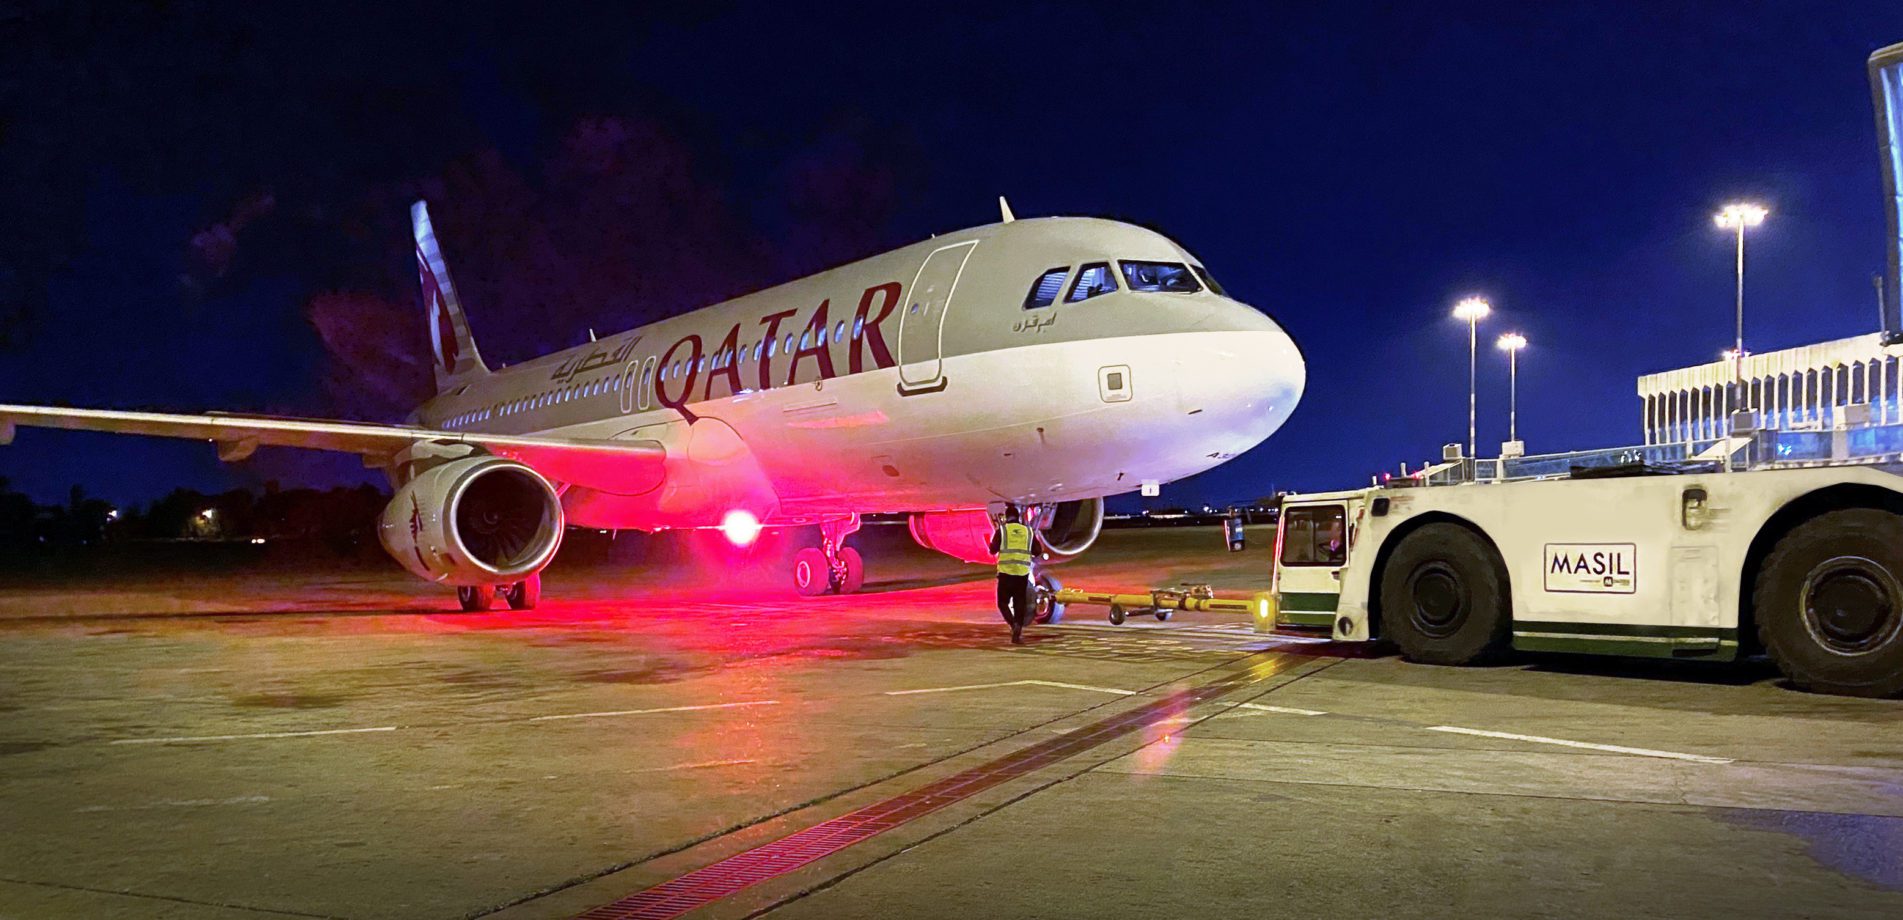 Qatar plane